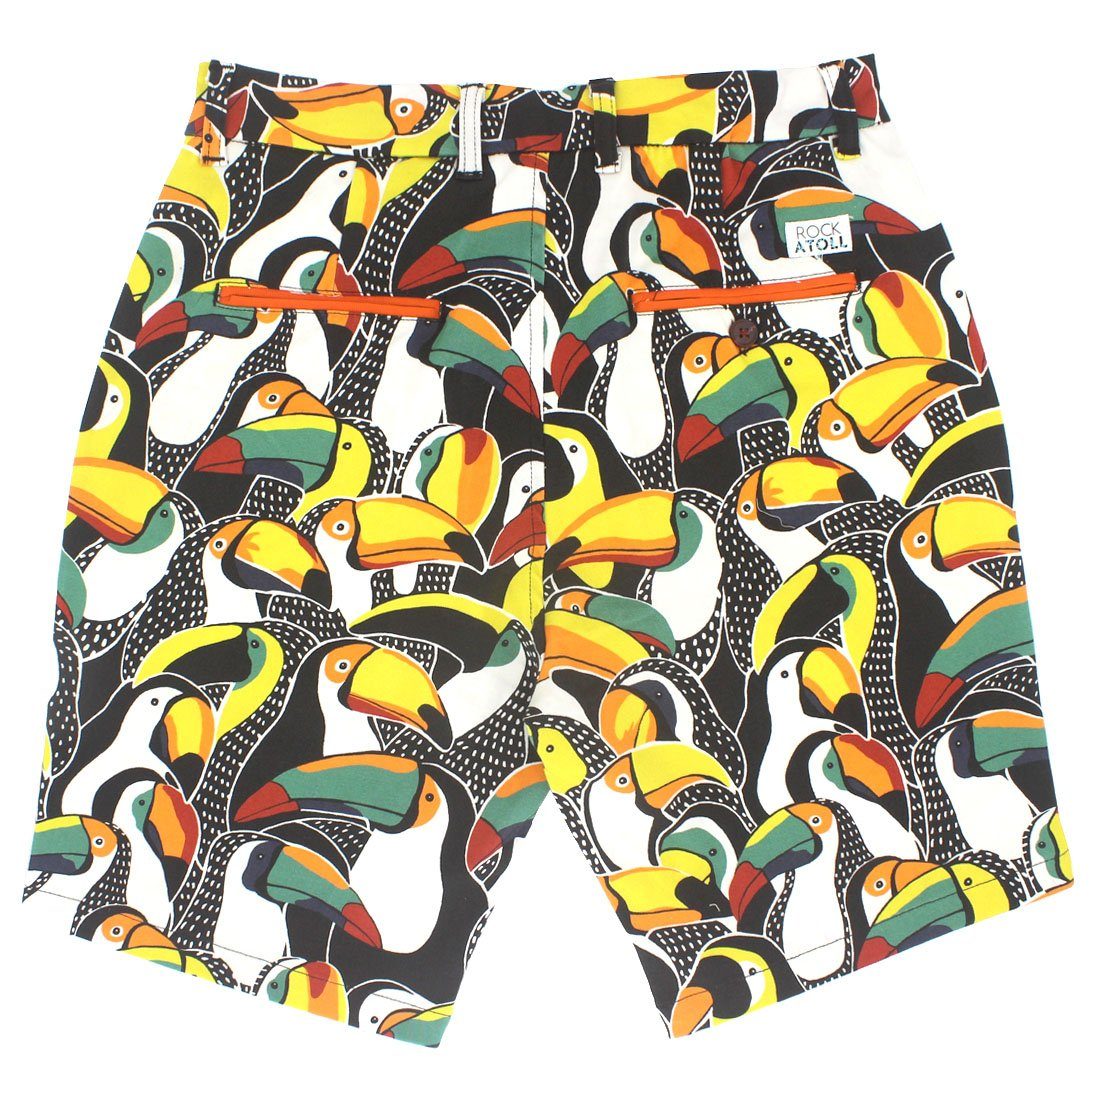 Bird Shorts For Men. Buy Mens Toucan Shorts Online | Rock Atoll